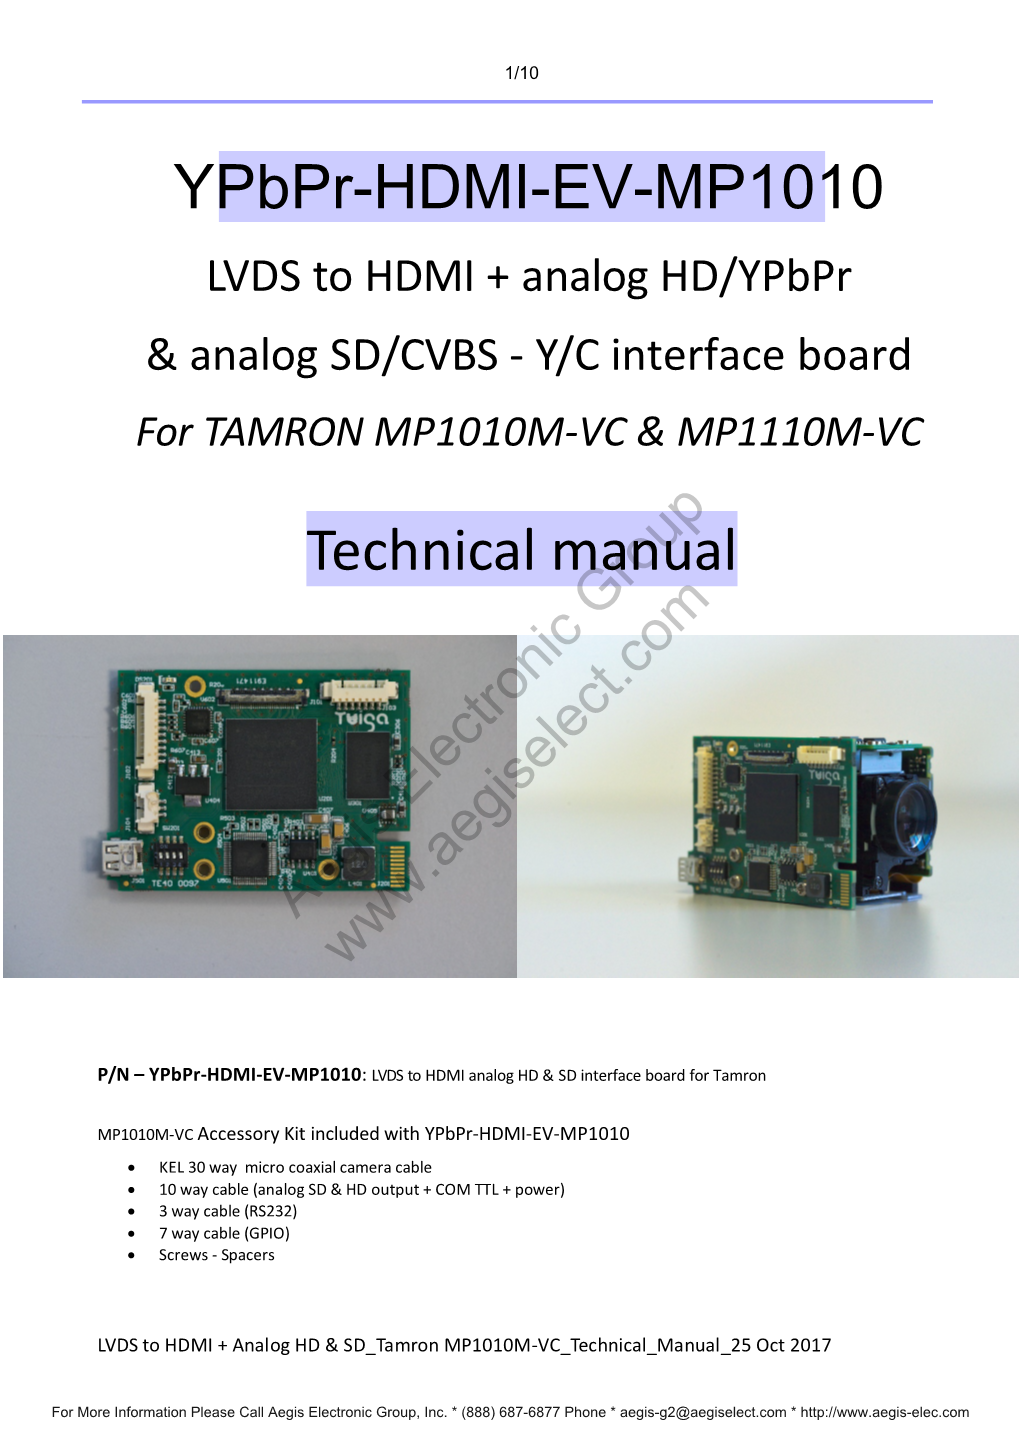 Ypbpr-HDMI-EV-MP1010 Technical Manual